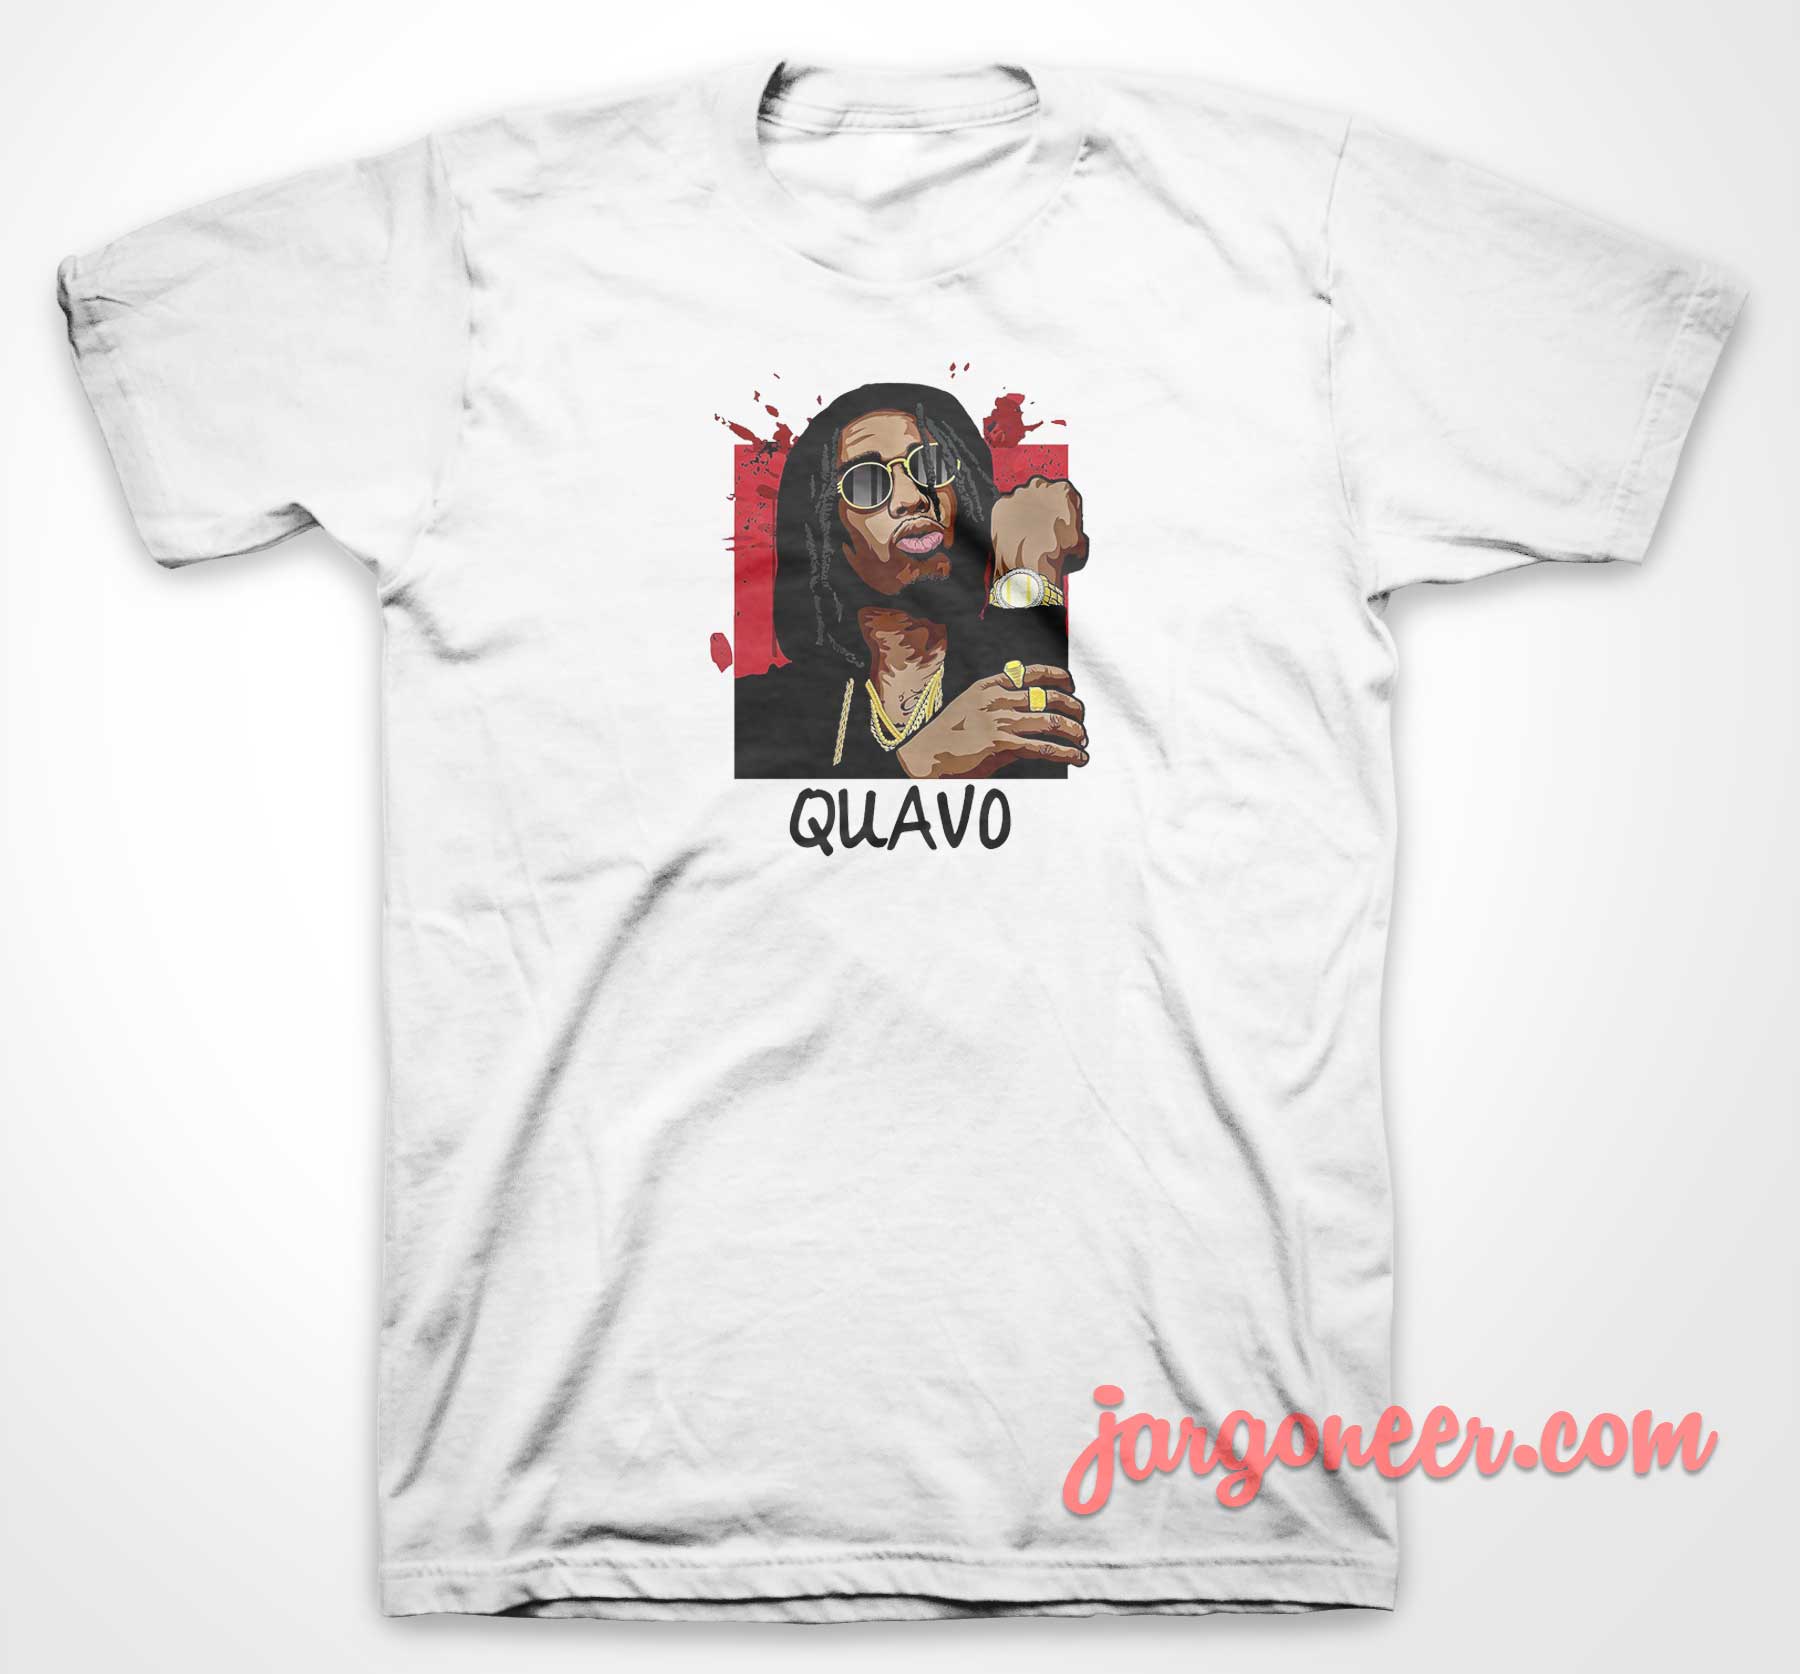 Quavo The Bold Young Guy - Shop Unique Graphic Cool Shirt Designs